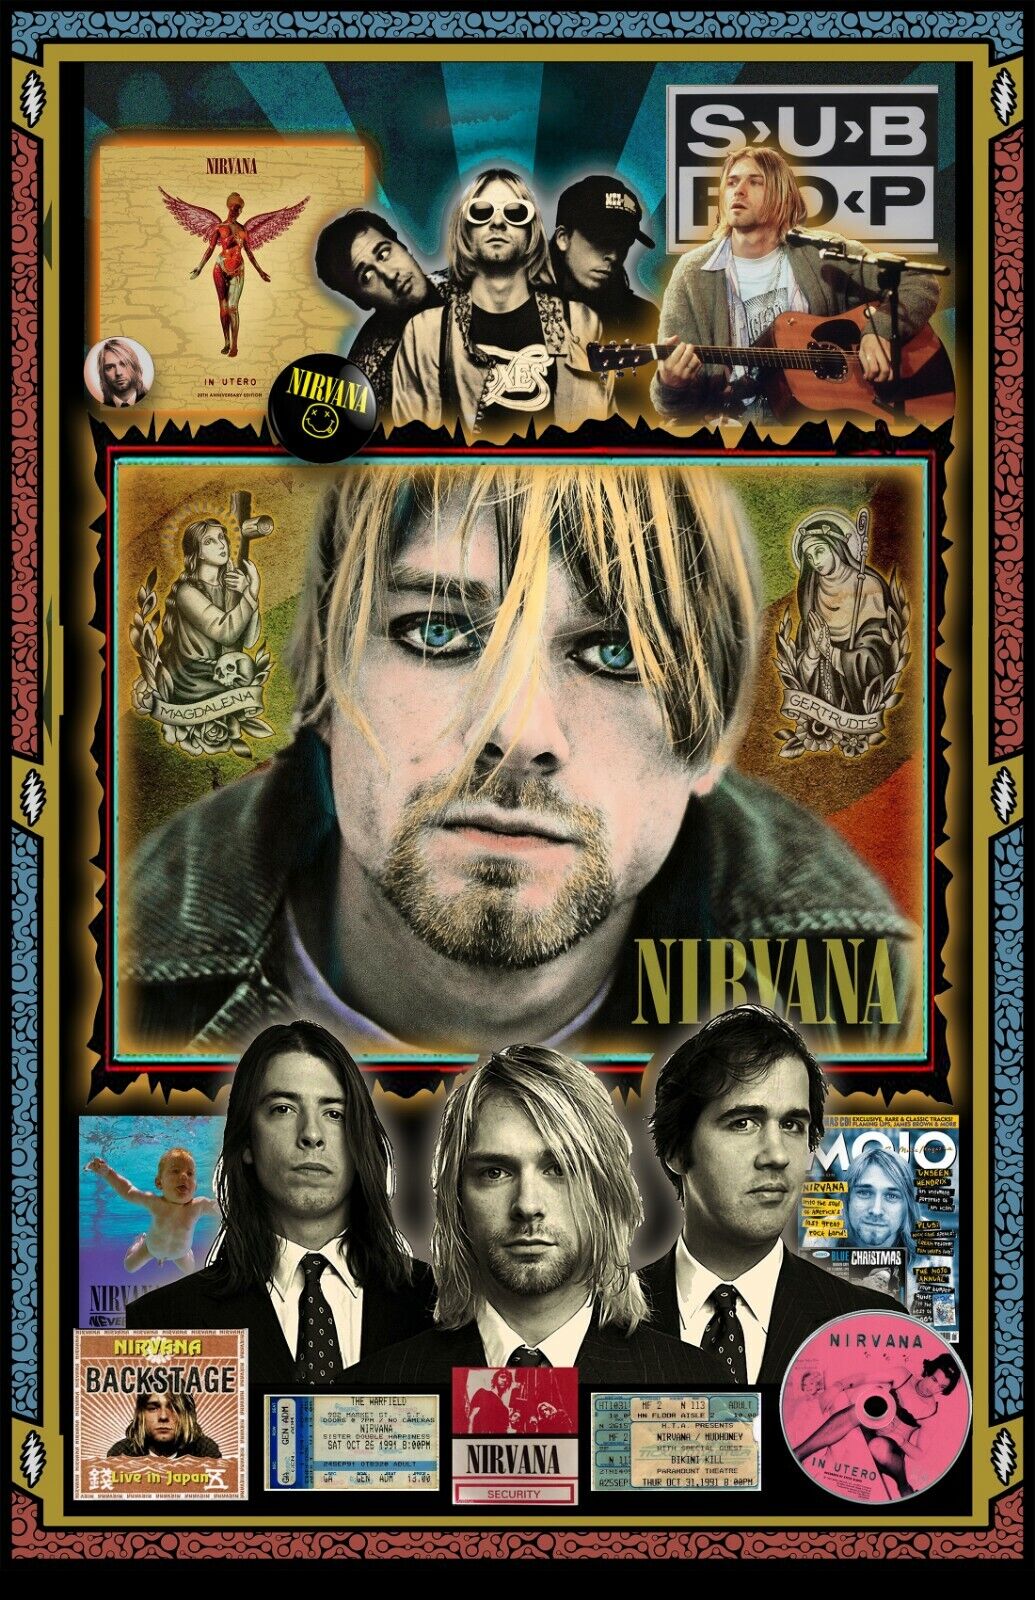 Kurt Cobain & Nirvana  Tribute Poster - 11x17" - Vivid Colors!